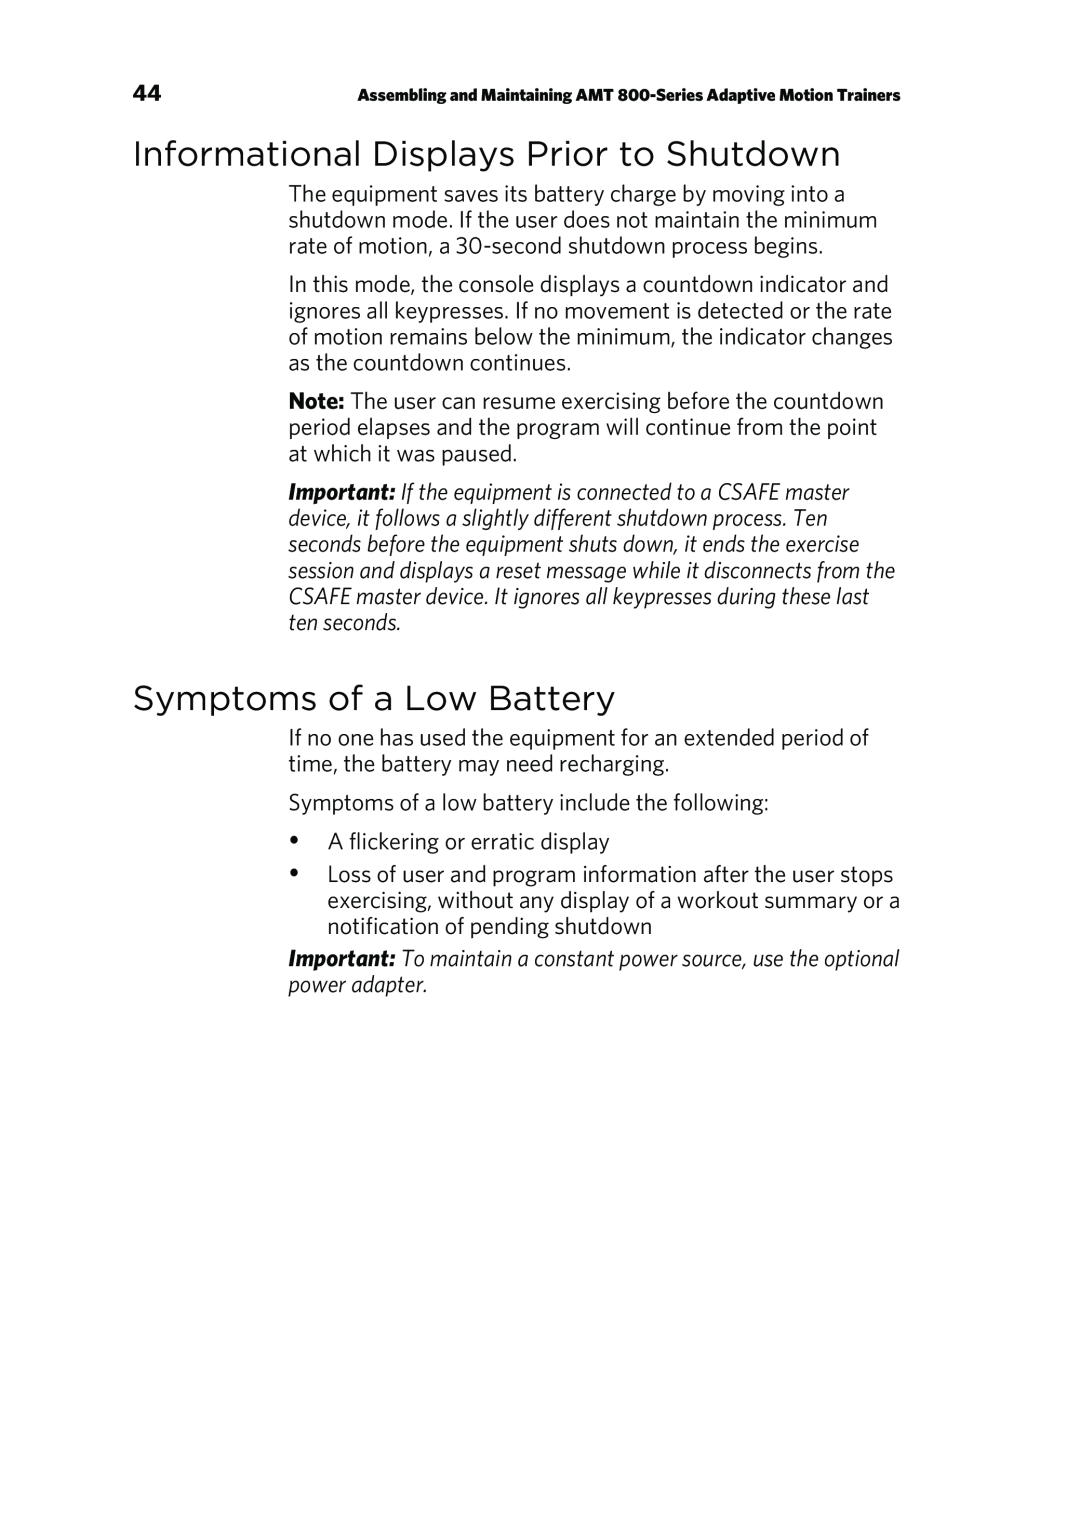 Precor P80 manual Informational Displays Prior to Shutdown, Symptoms of a Low Battery 